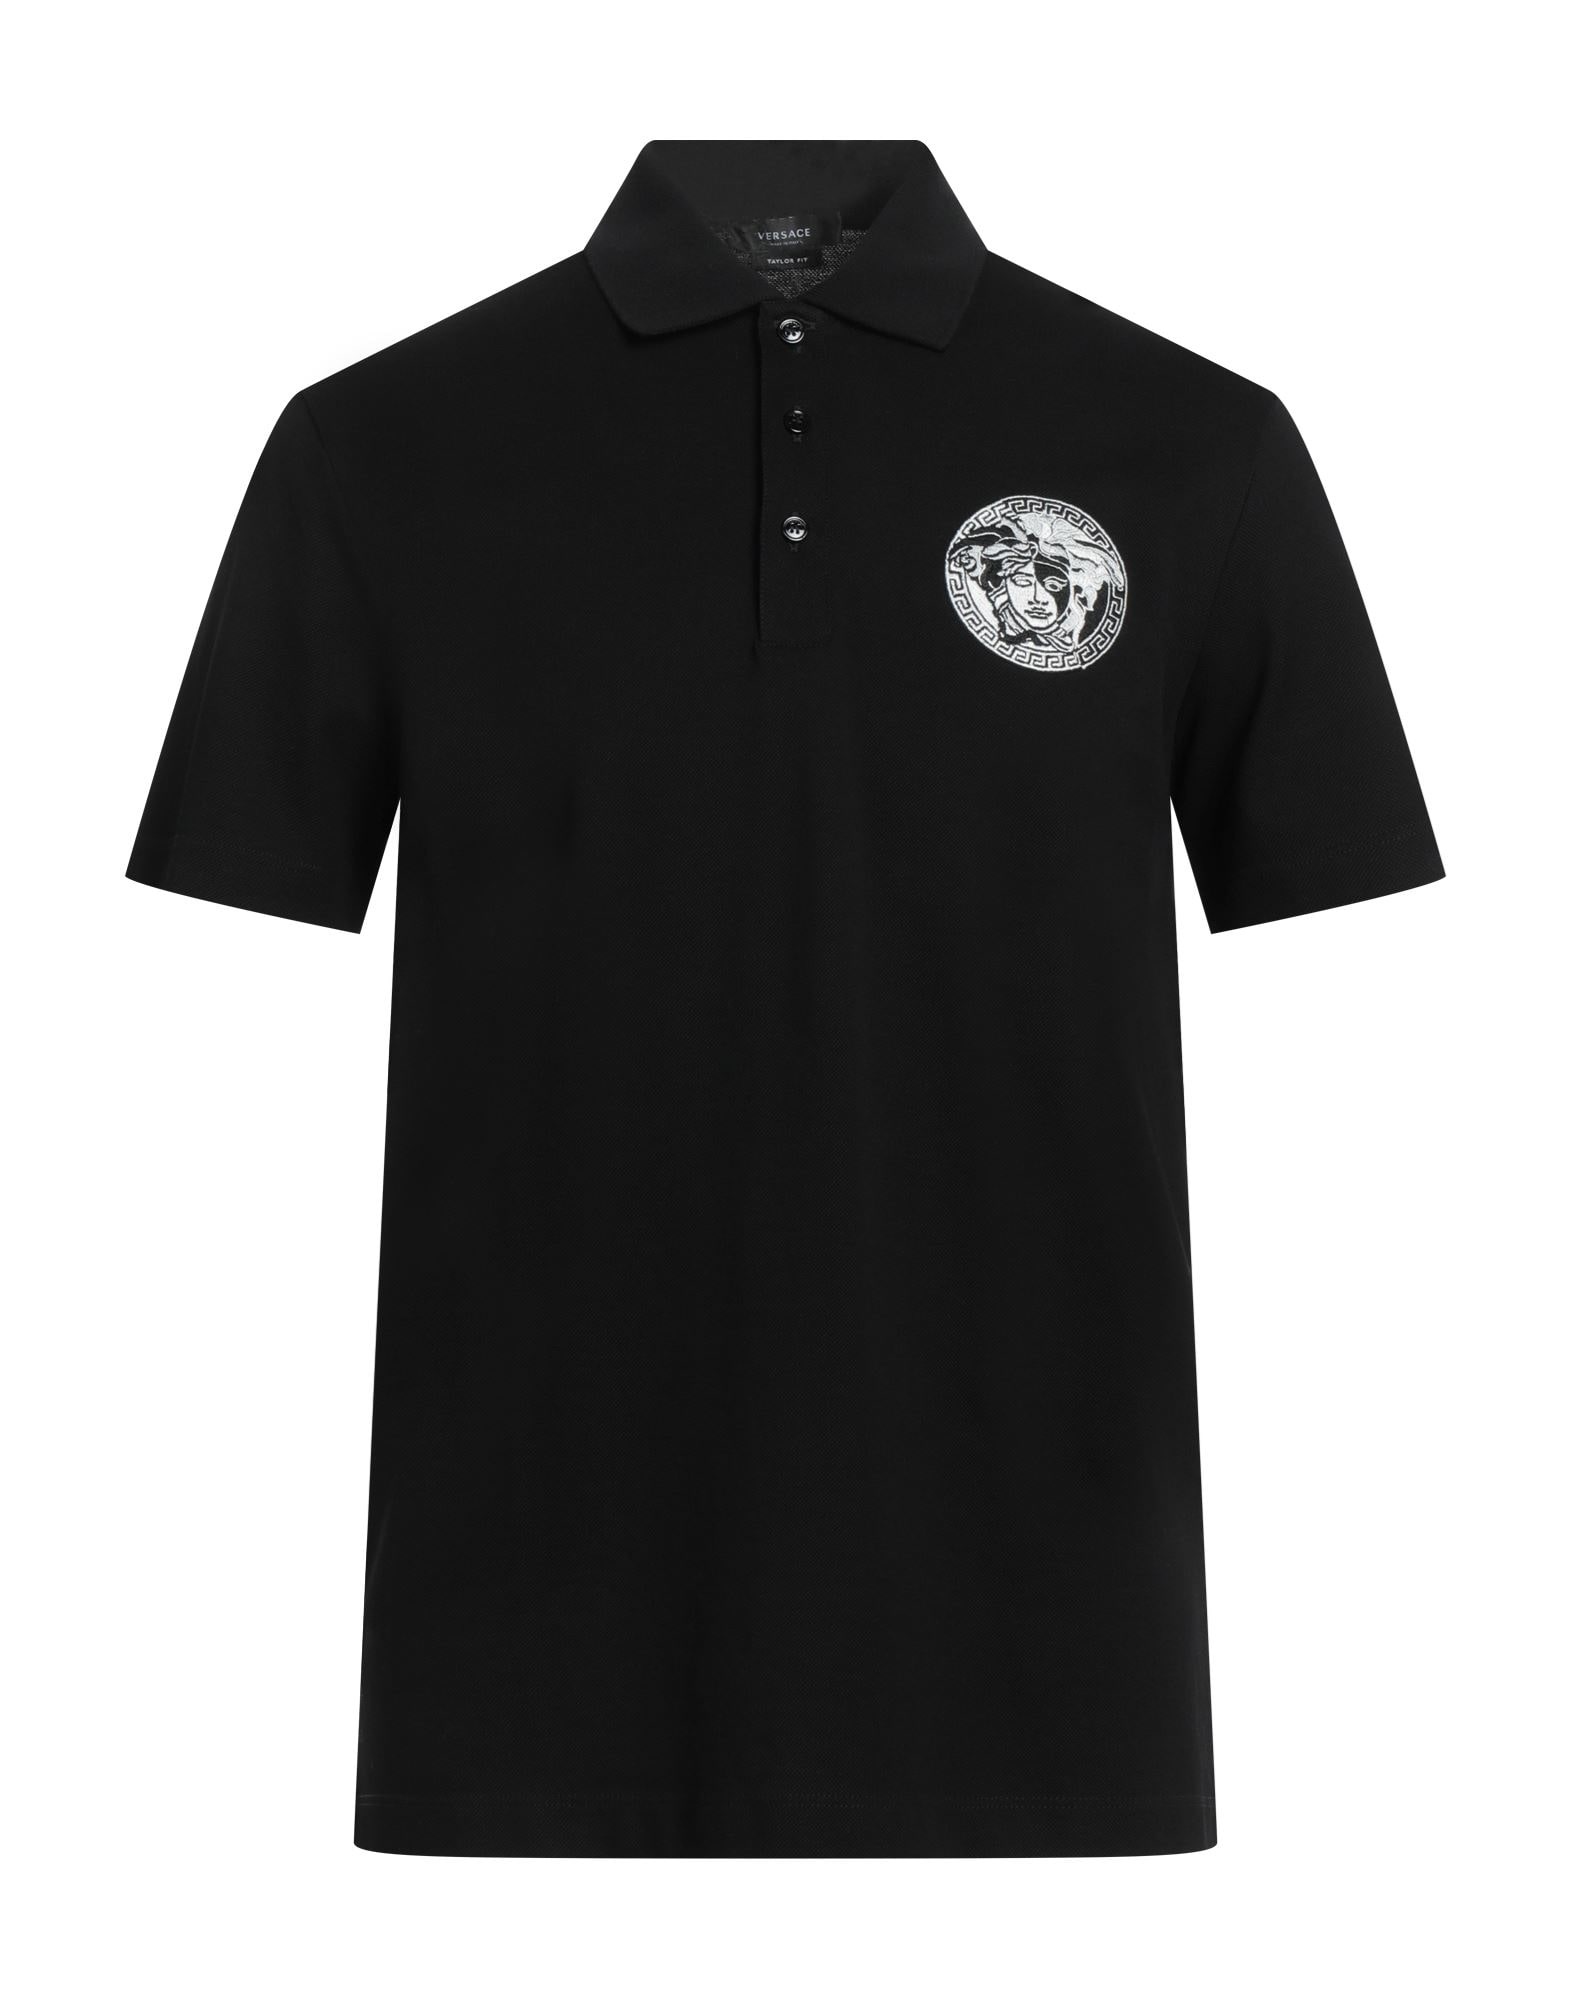 Black Men's Polo Shirt - 1